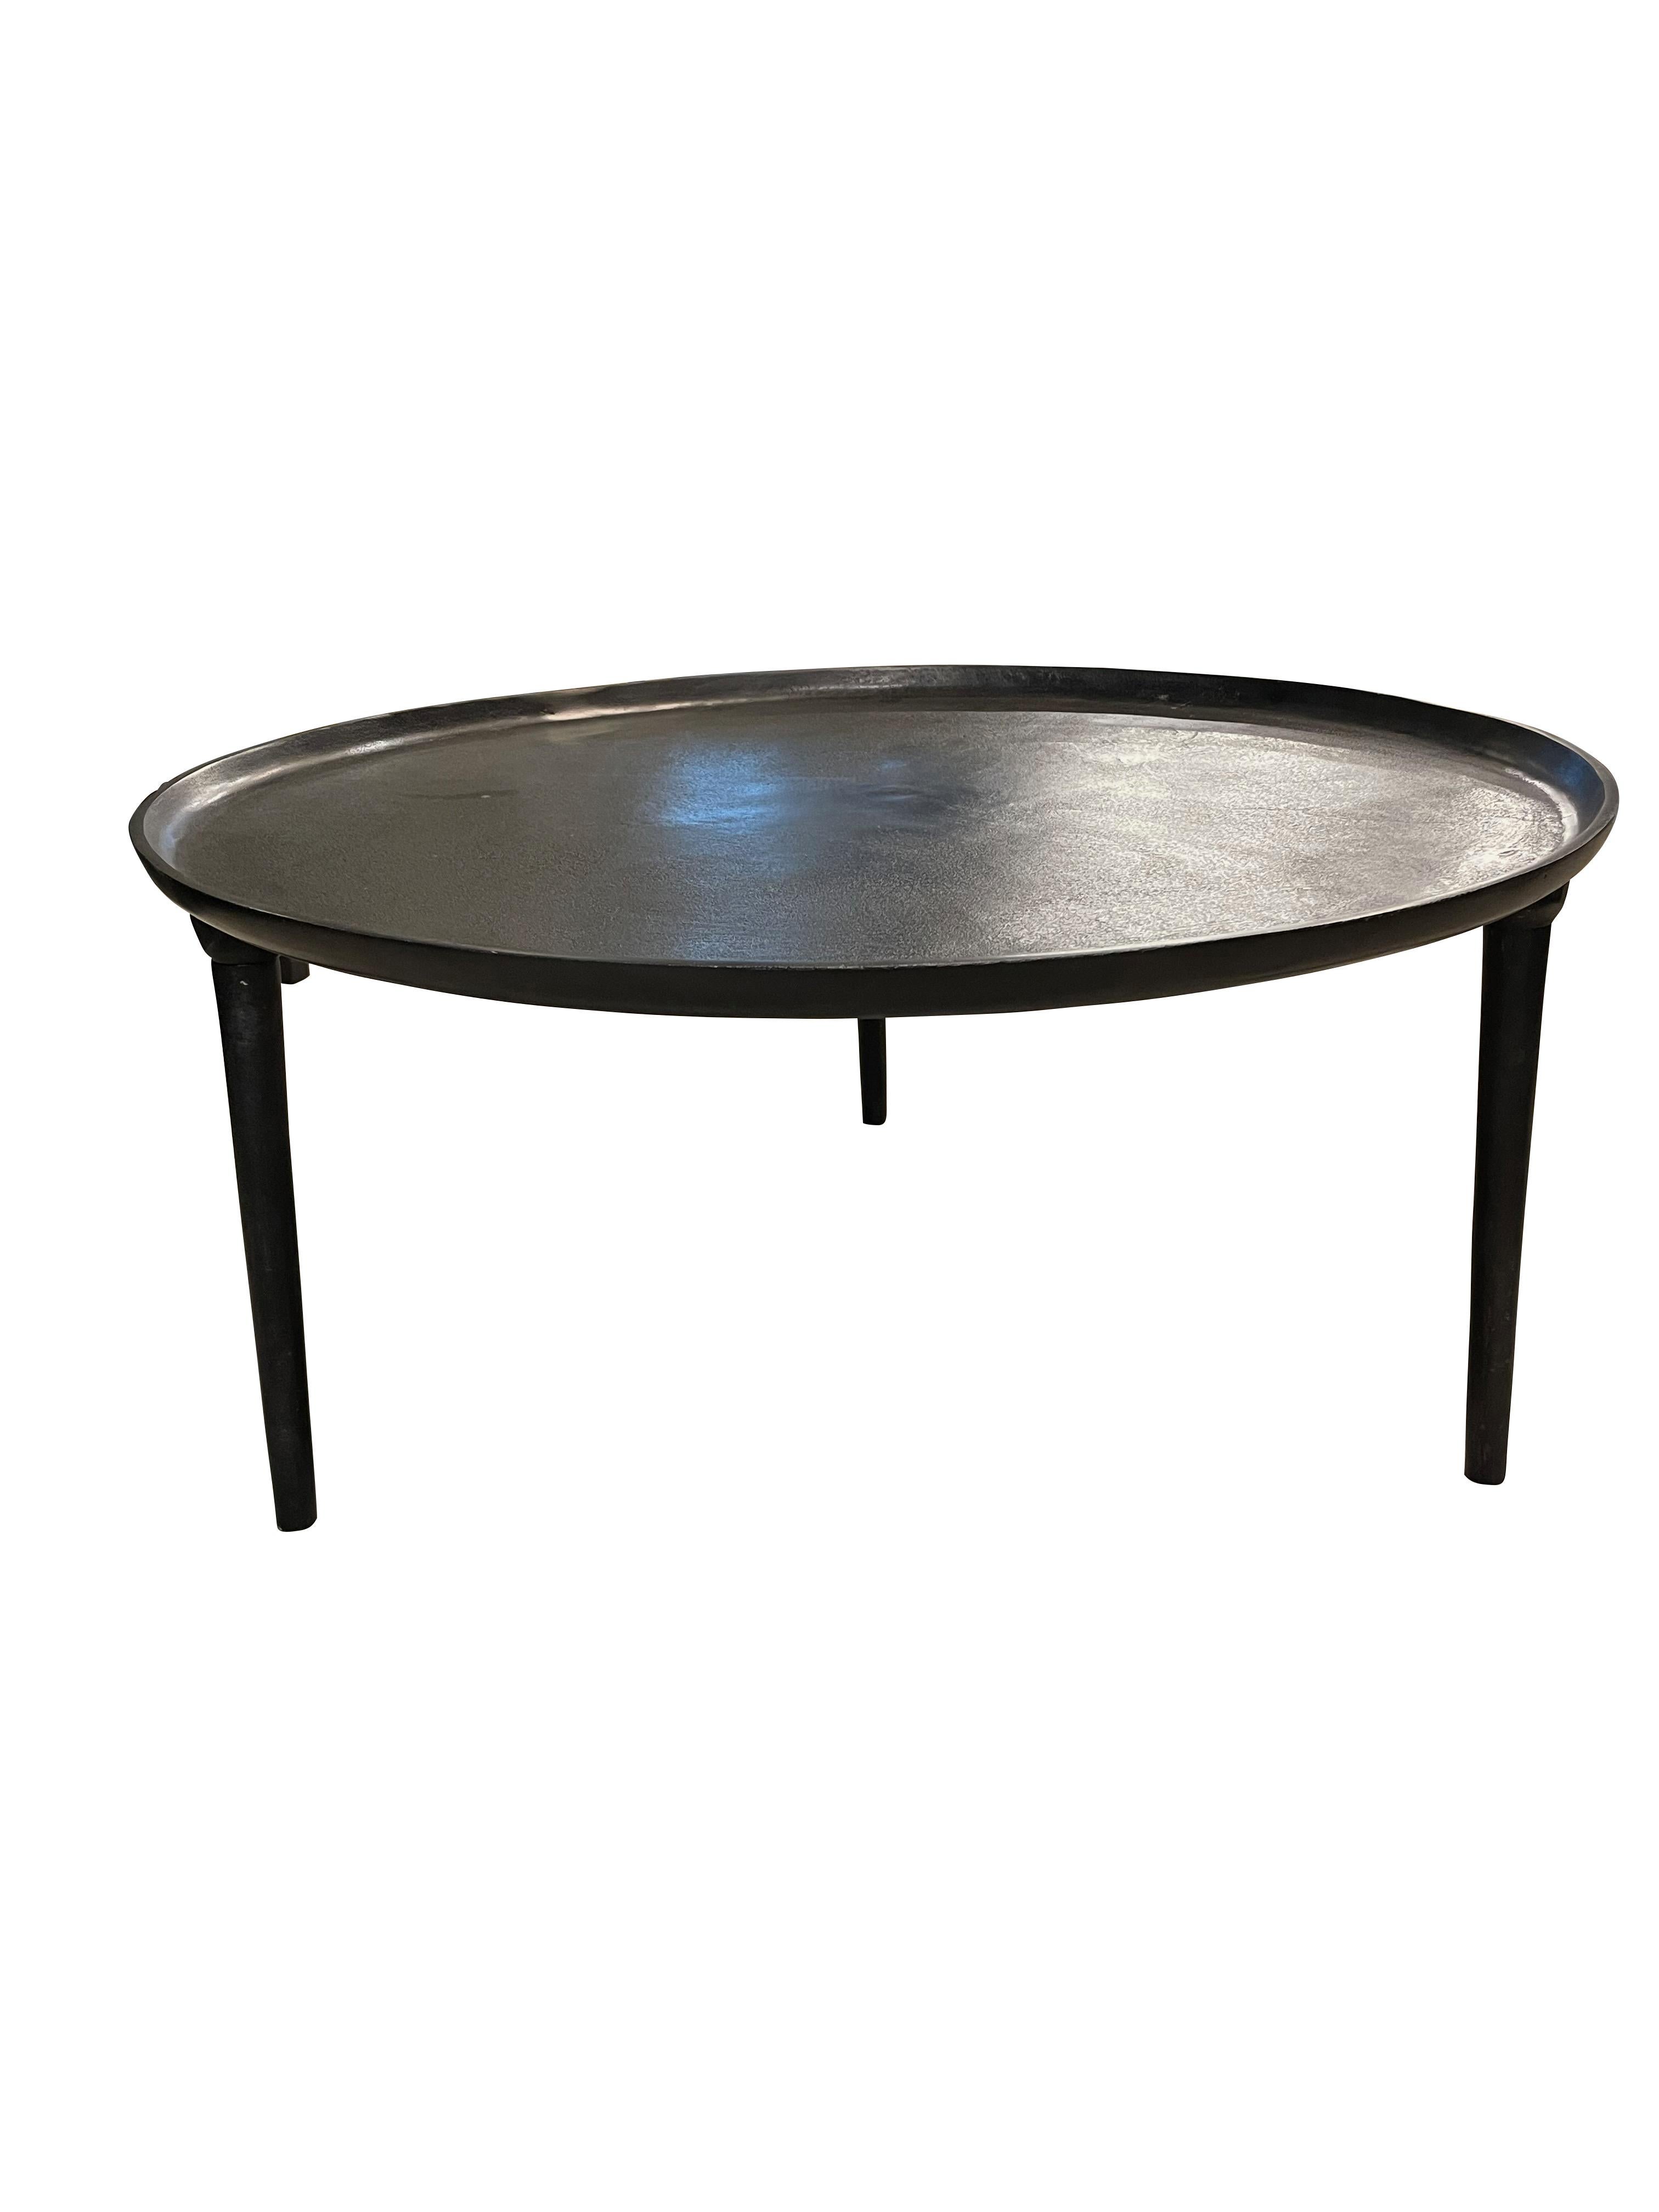 Contemporary Indonesian round black iron coffee table.
Three taper designed legs.
Slight lip around border.
Subtle textured finish.
ARRIVING NOVEMBER